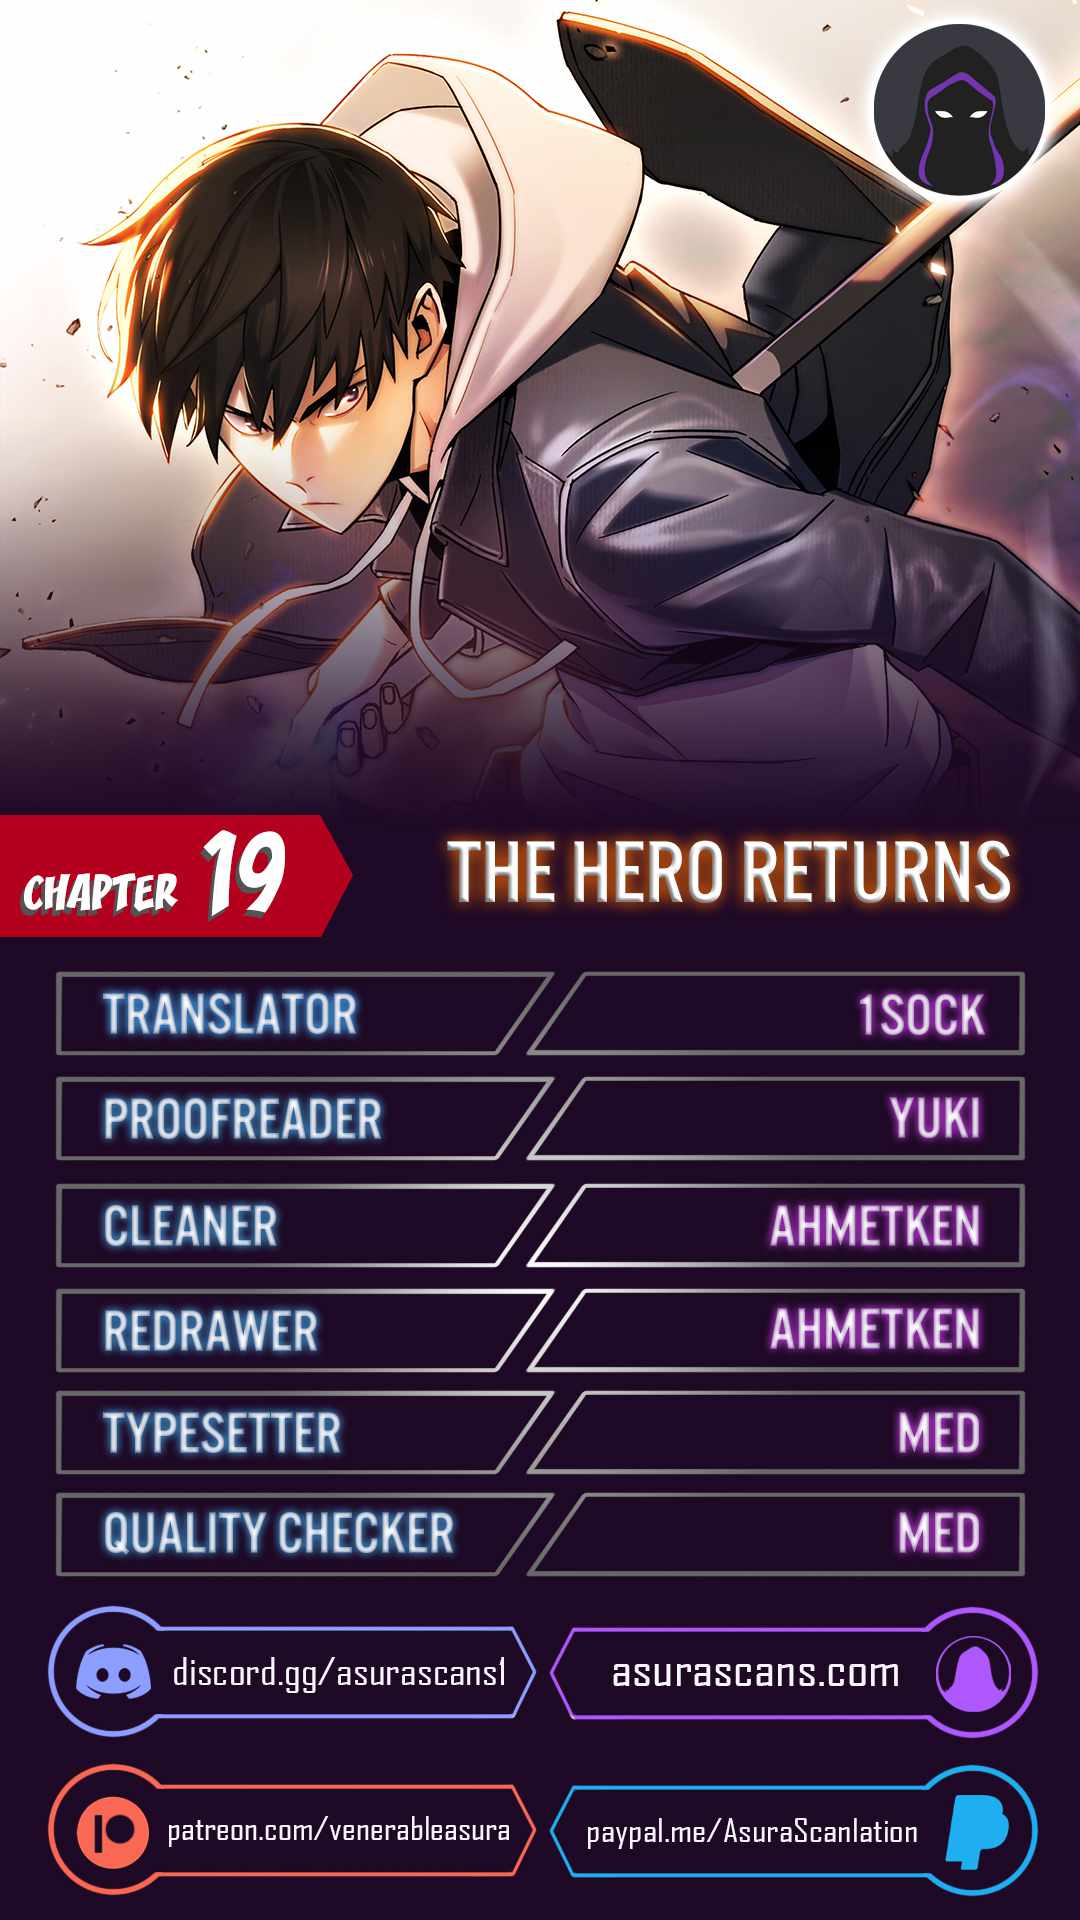 The Hero Returns chapter 19